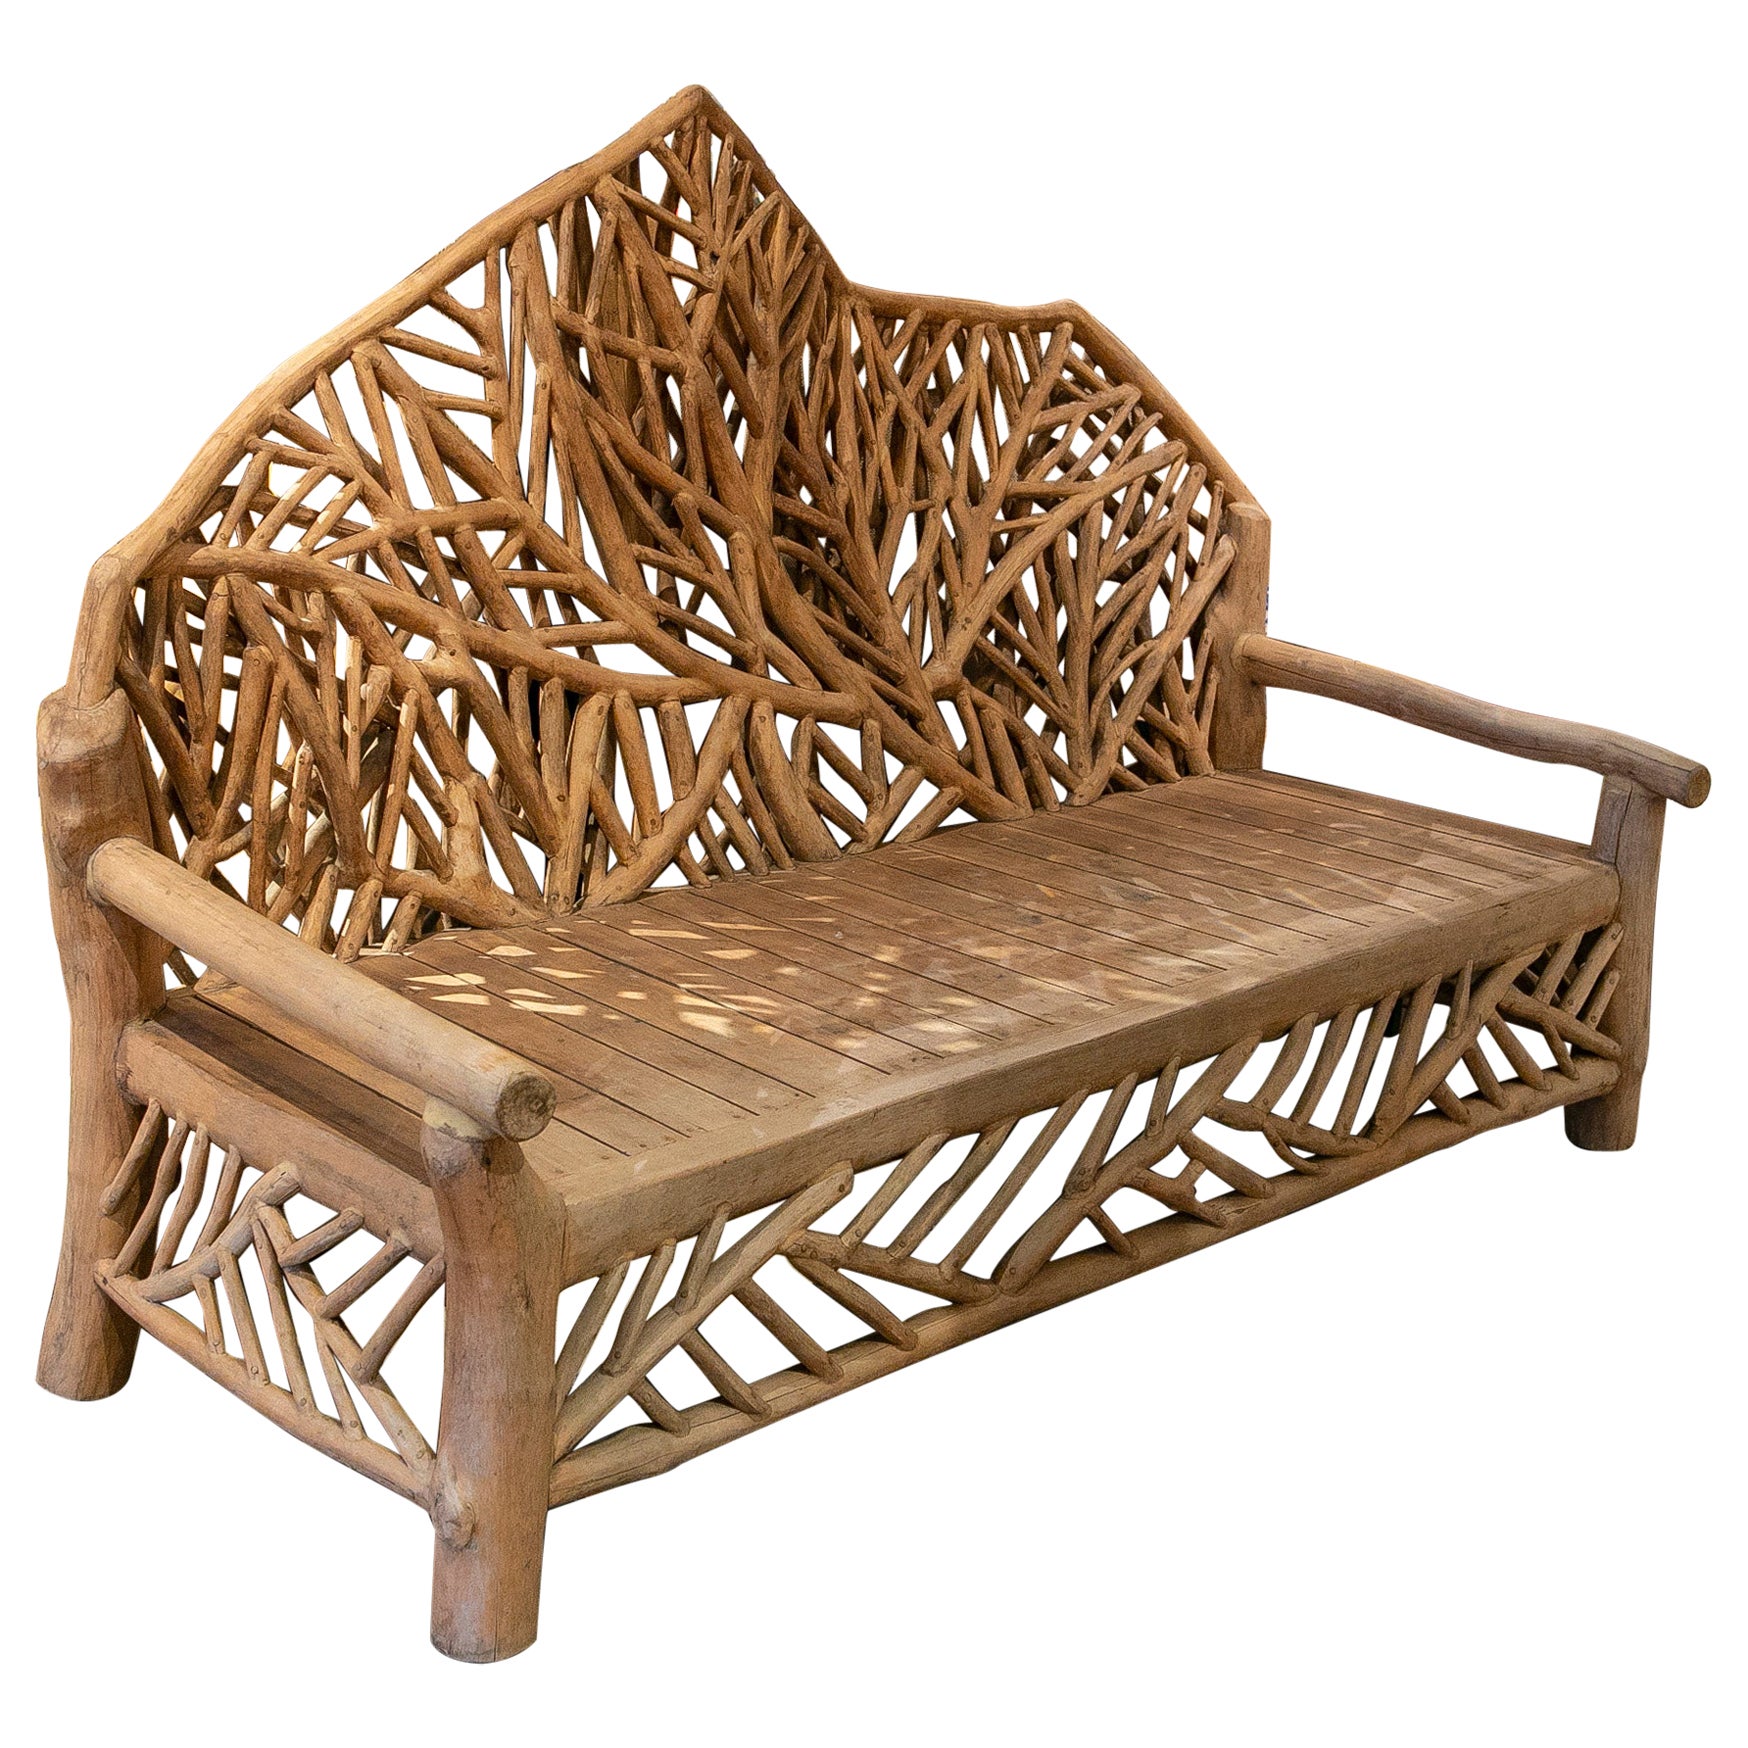 Handmade Wooden Sofa Made of Wooden Logs for the Garden